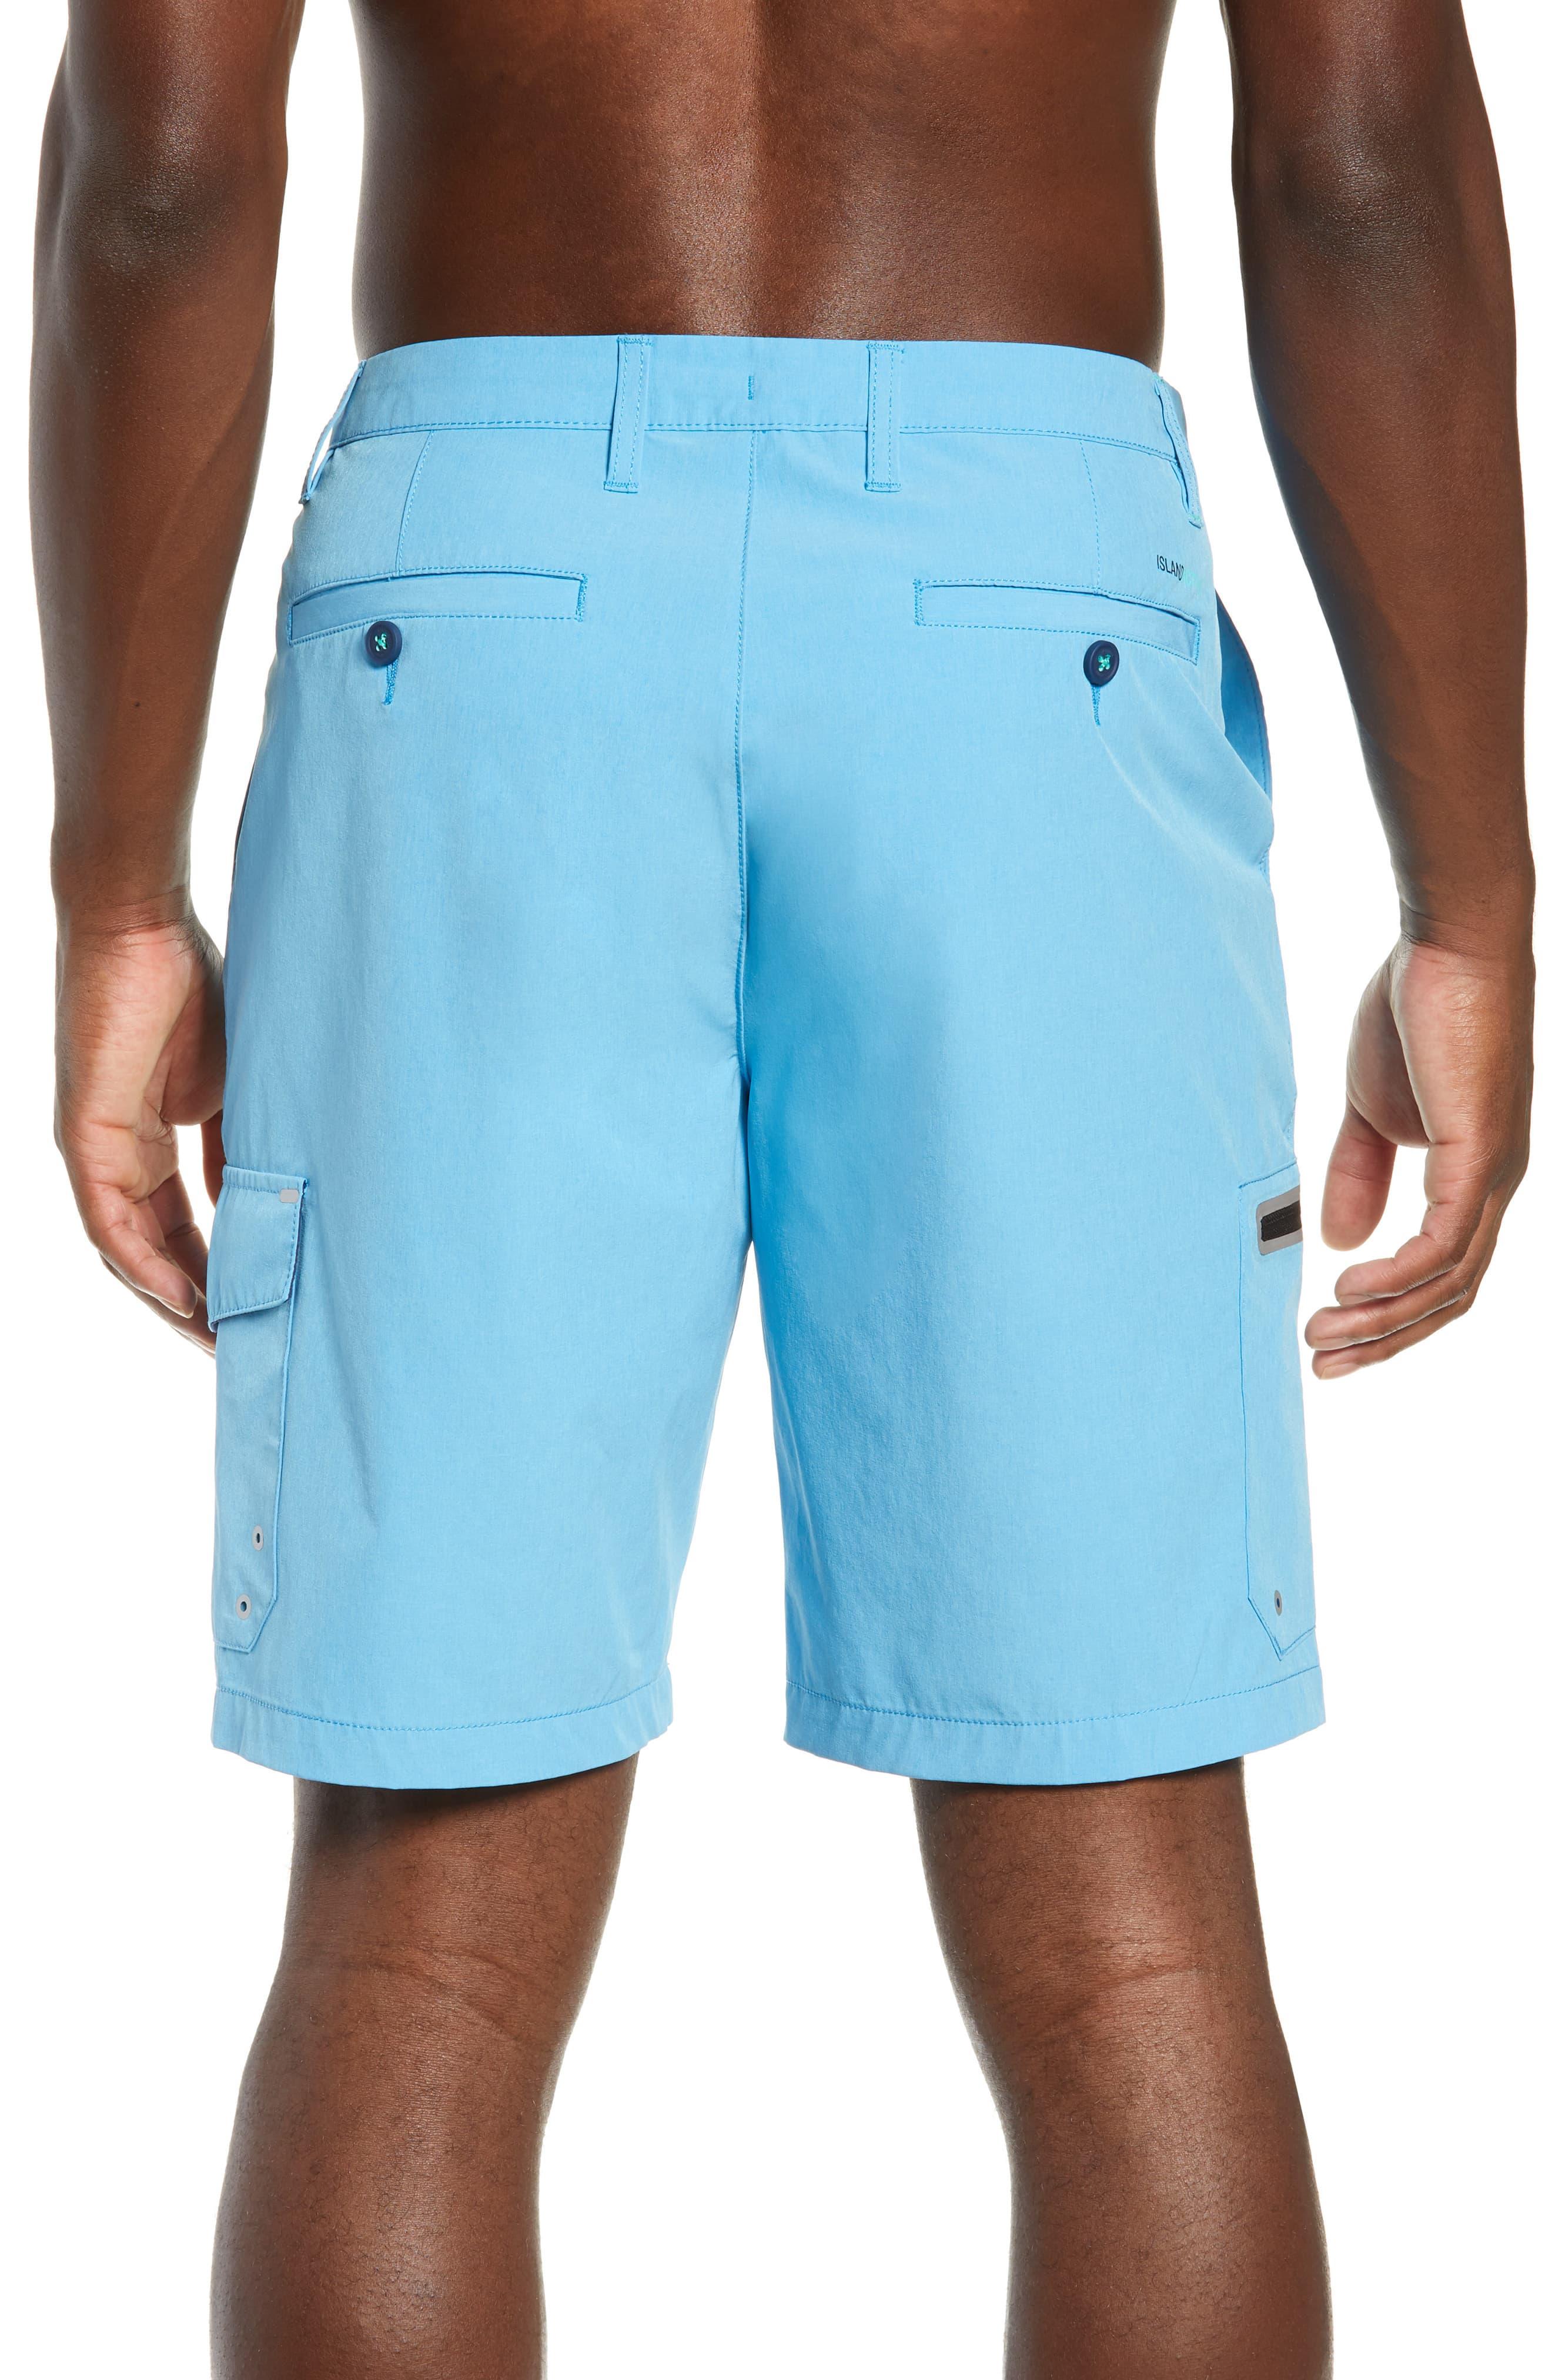 Tommy Bahama Cayman Isles Cargo Hybrid Board Shorts in Blue for Men - Lyst